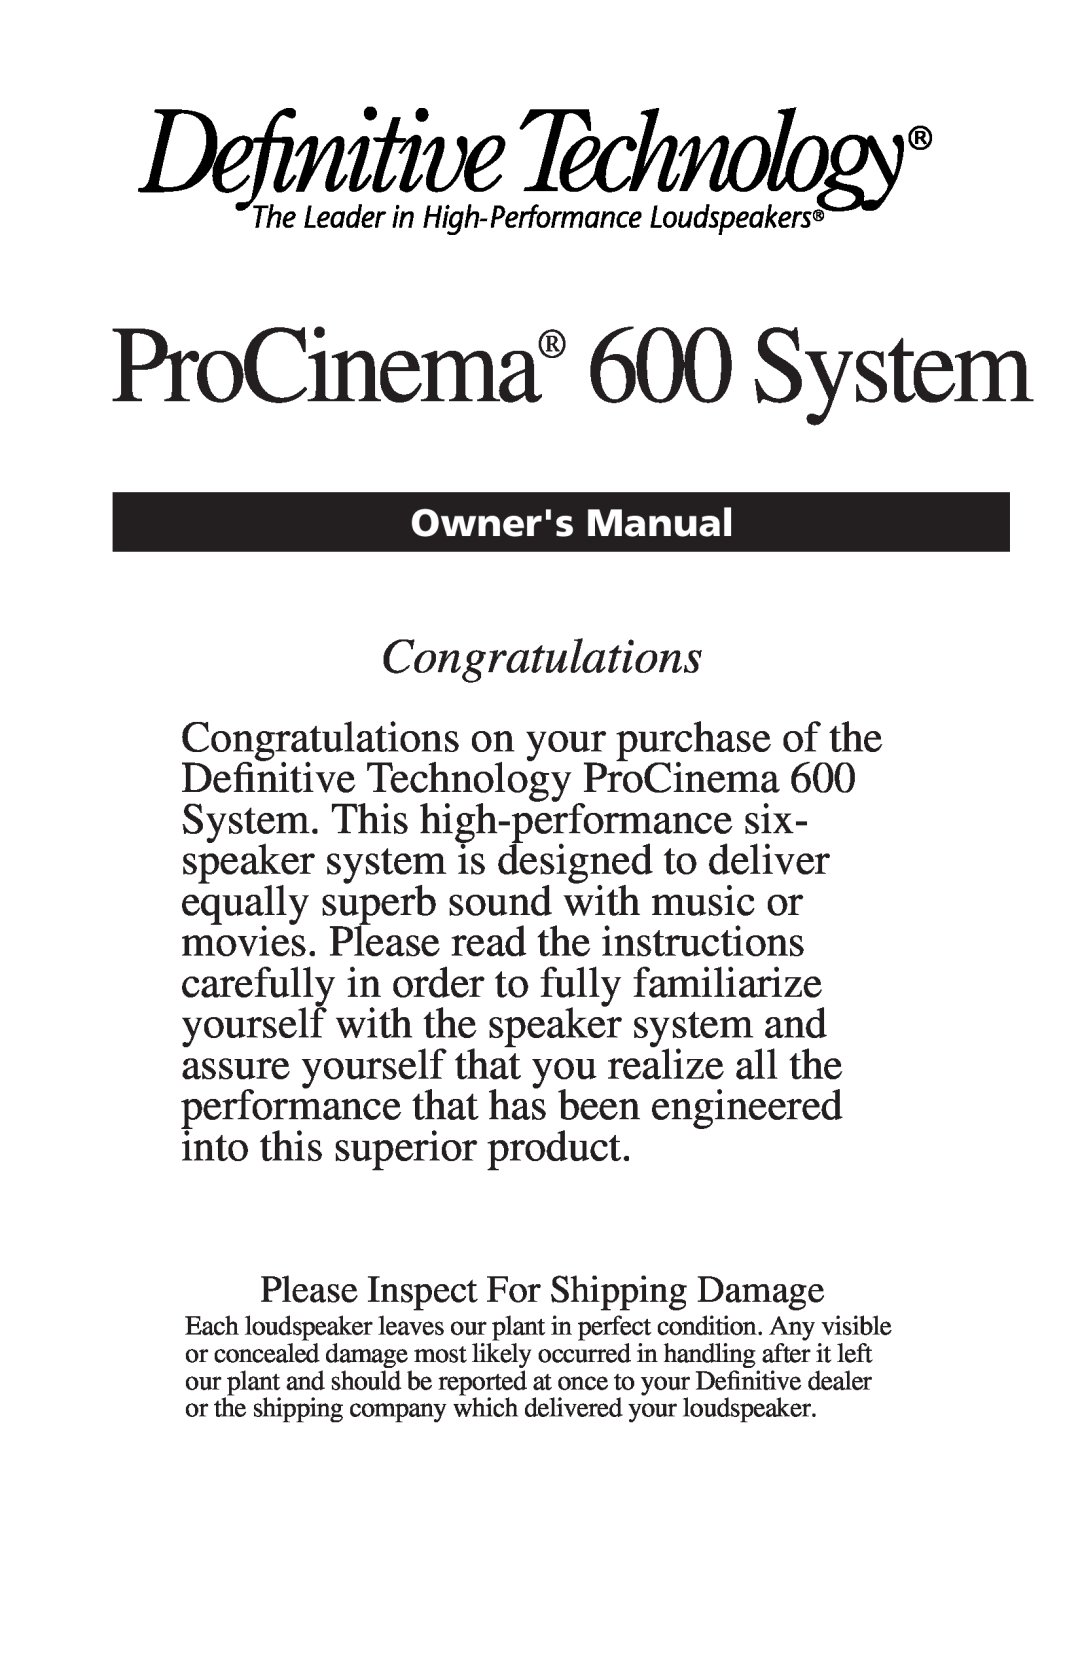 Definitive Technology PROCINEMA6006 owner manual ProCinema 600 System, Congratulations 